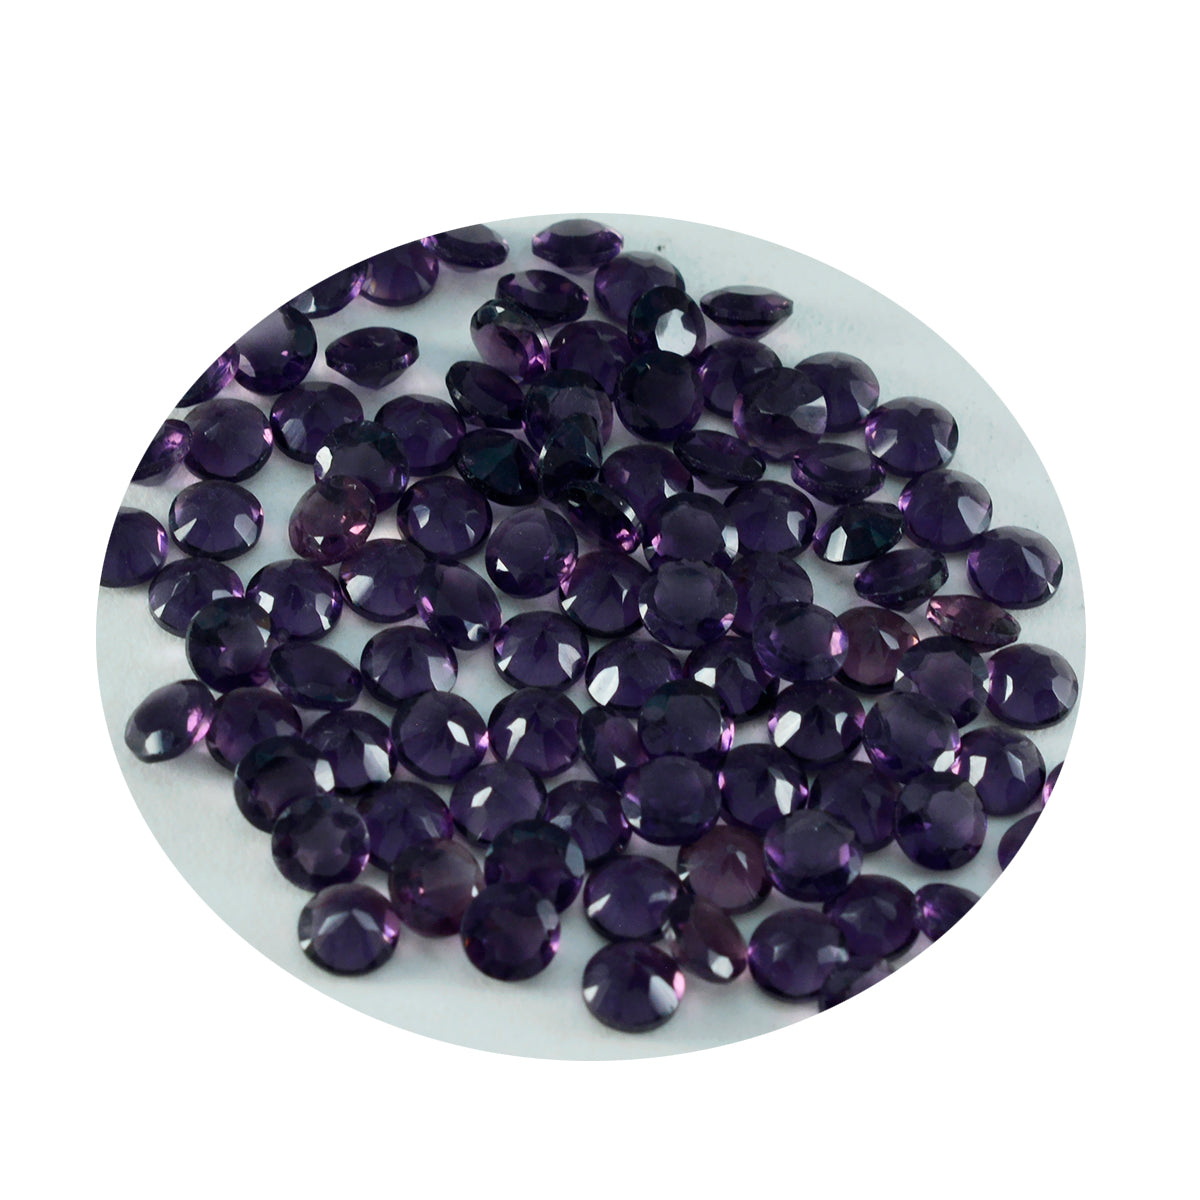 Riyogems 1PC Purple Amethyst CZ Faceted 3x3 mm Round Shape Nice Quality Gems